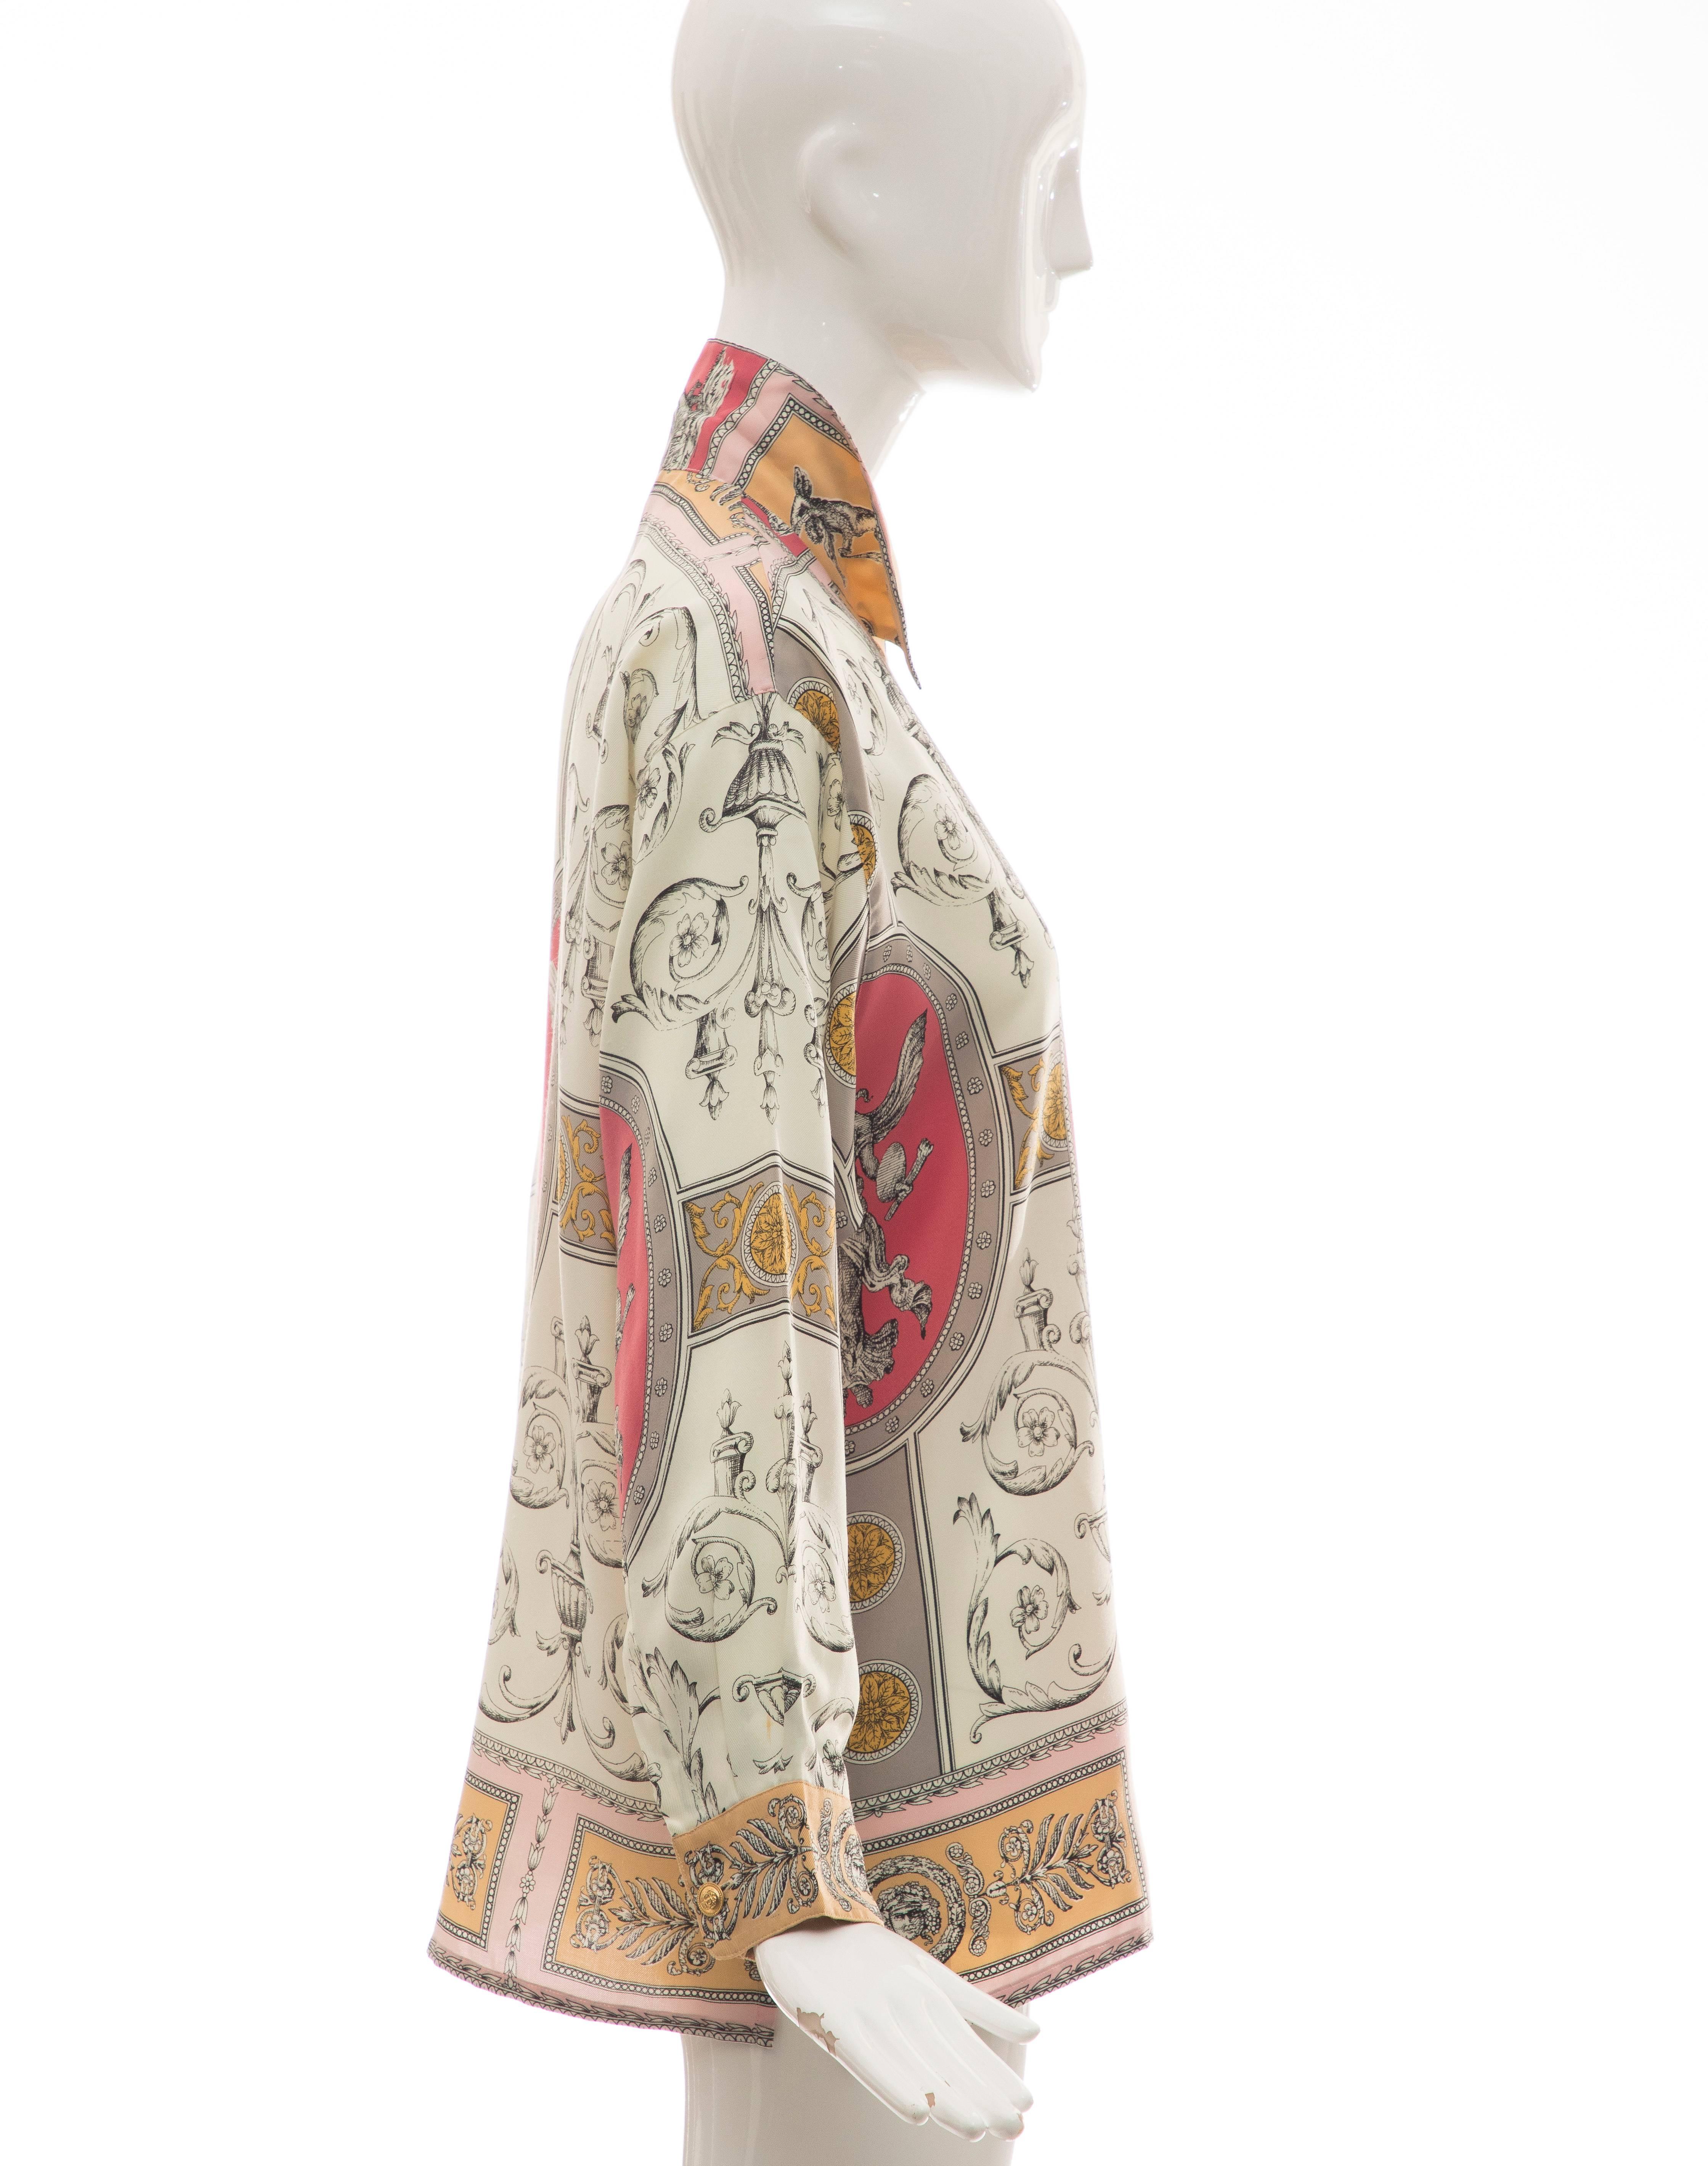 Gianni Versace Cherub Print Silk Blouse, Circa 1990's In Excellent Condition For Sale In Cincinnati, OH